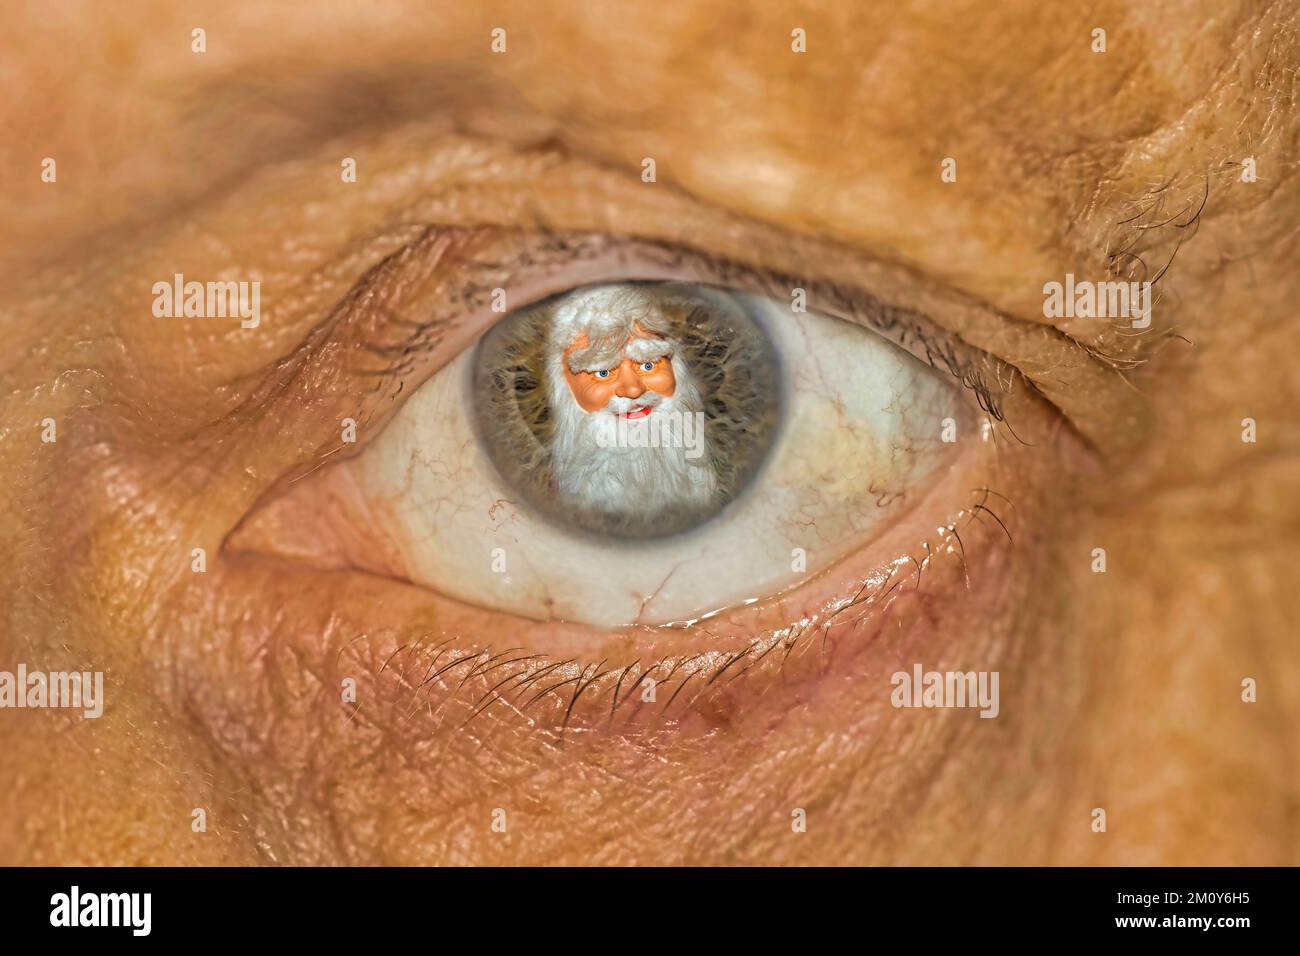 Santa Claus reflected in the eye of a senior citizen Stock Photo